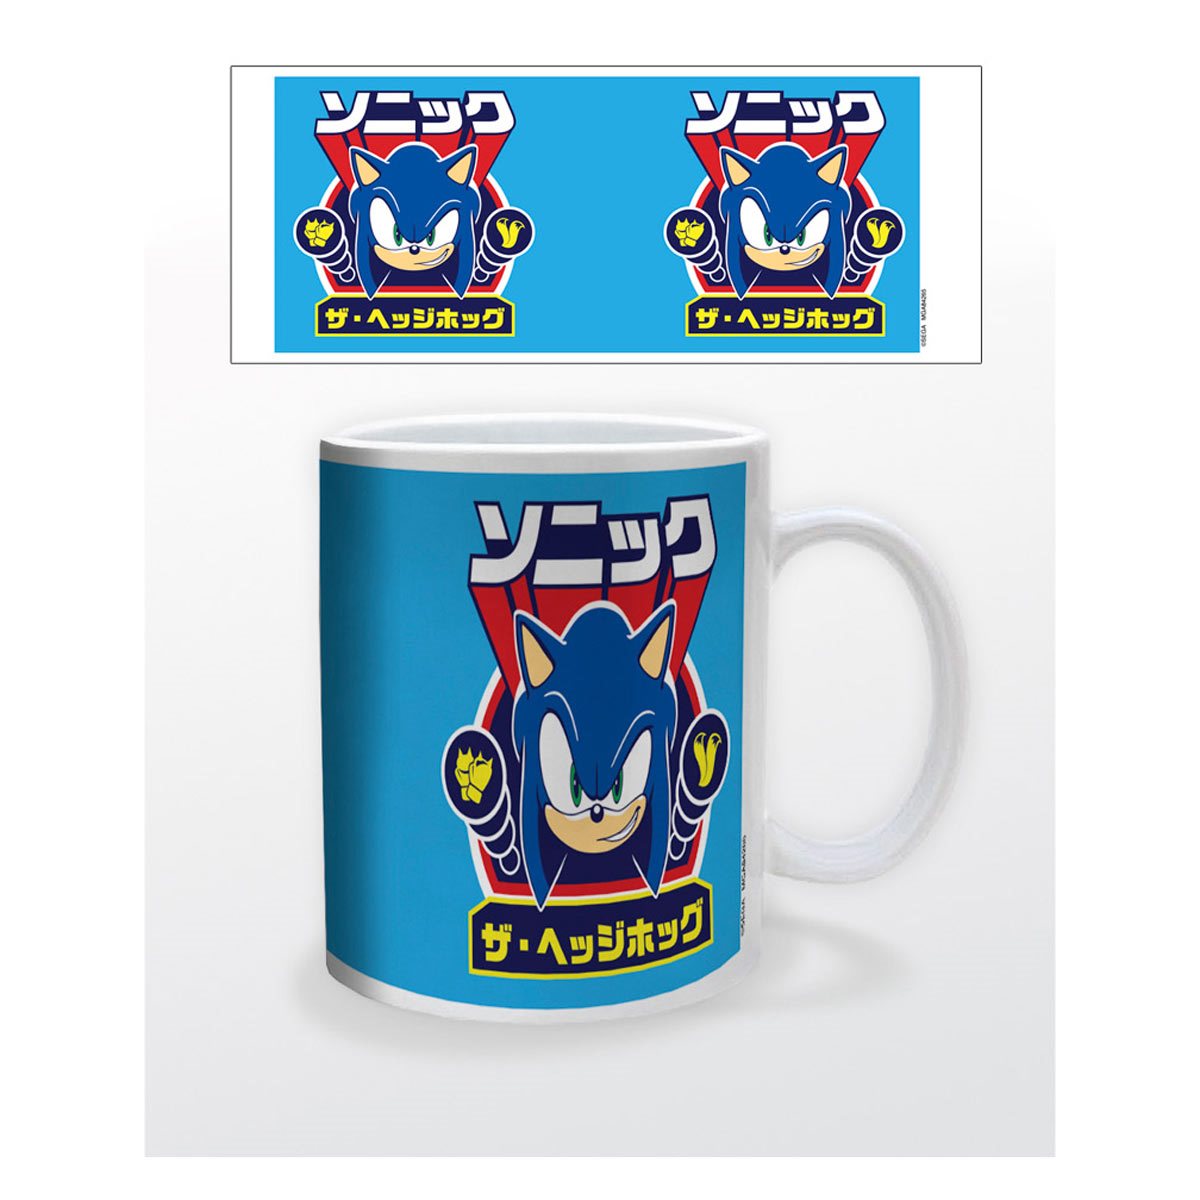 Sonic the Hedgehog - Set mug and puzzle, 24.90 CHF